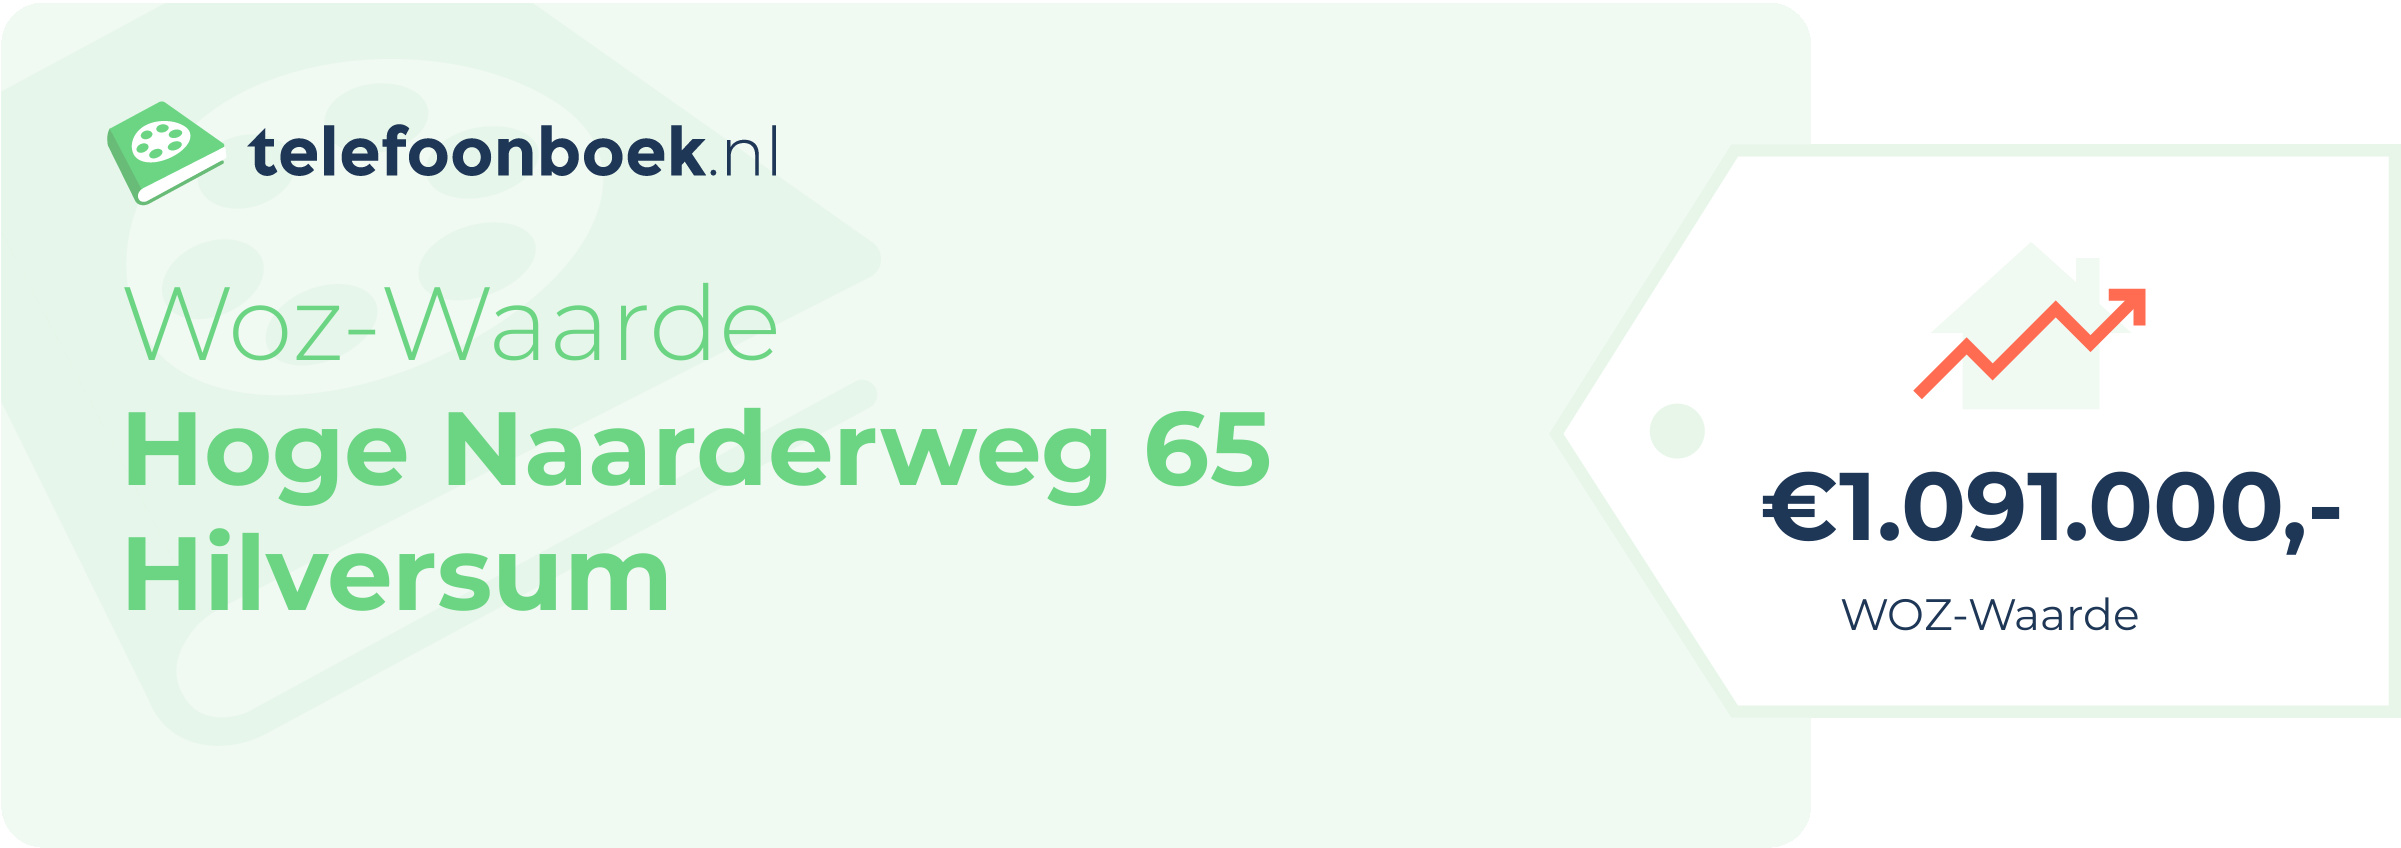 WOZ-waarde Hoge Naarderweg 65 Hilversum